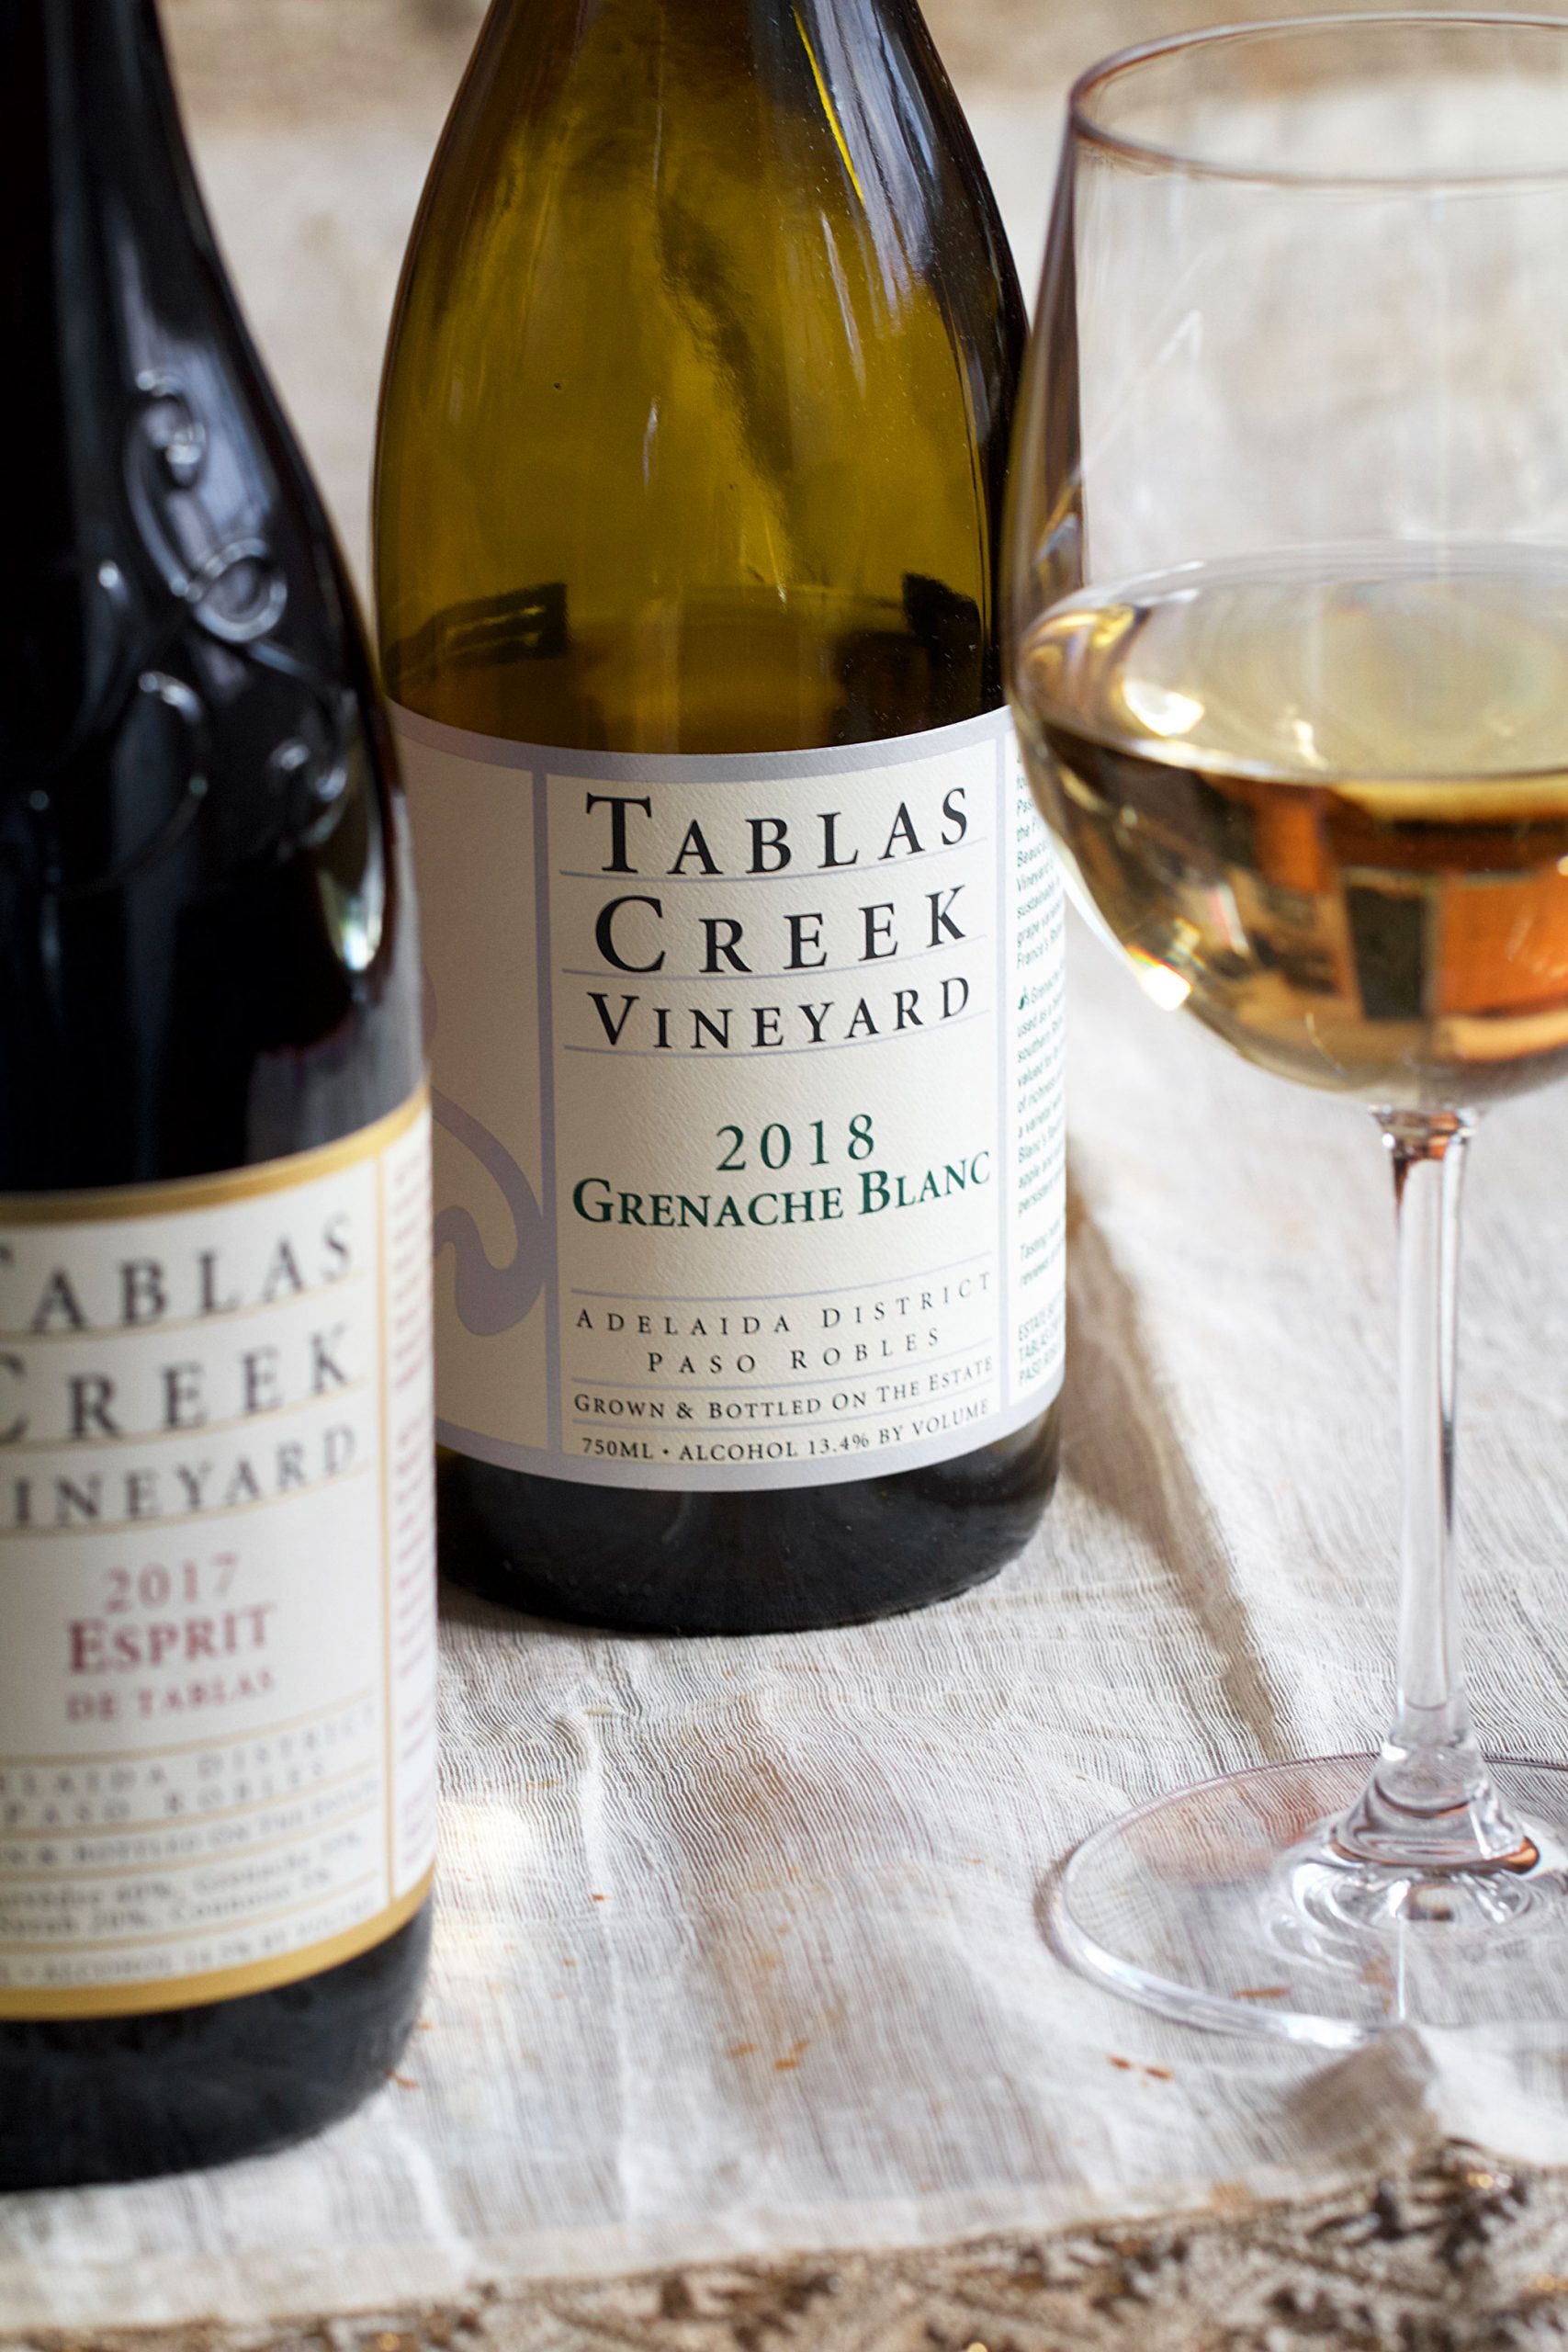 Tablas Creek Vineyard wines for Marino Ristorante online pairing dinner